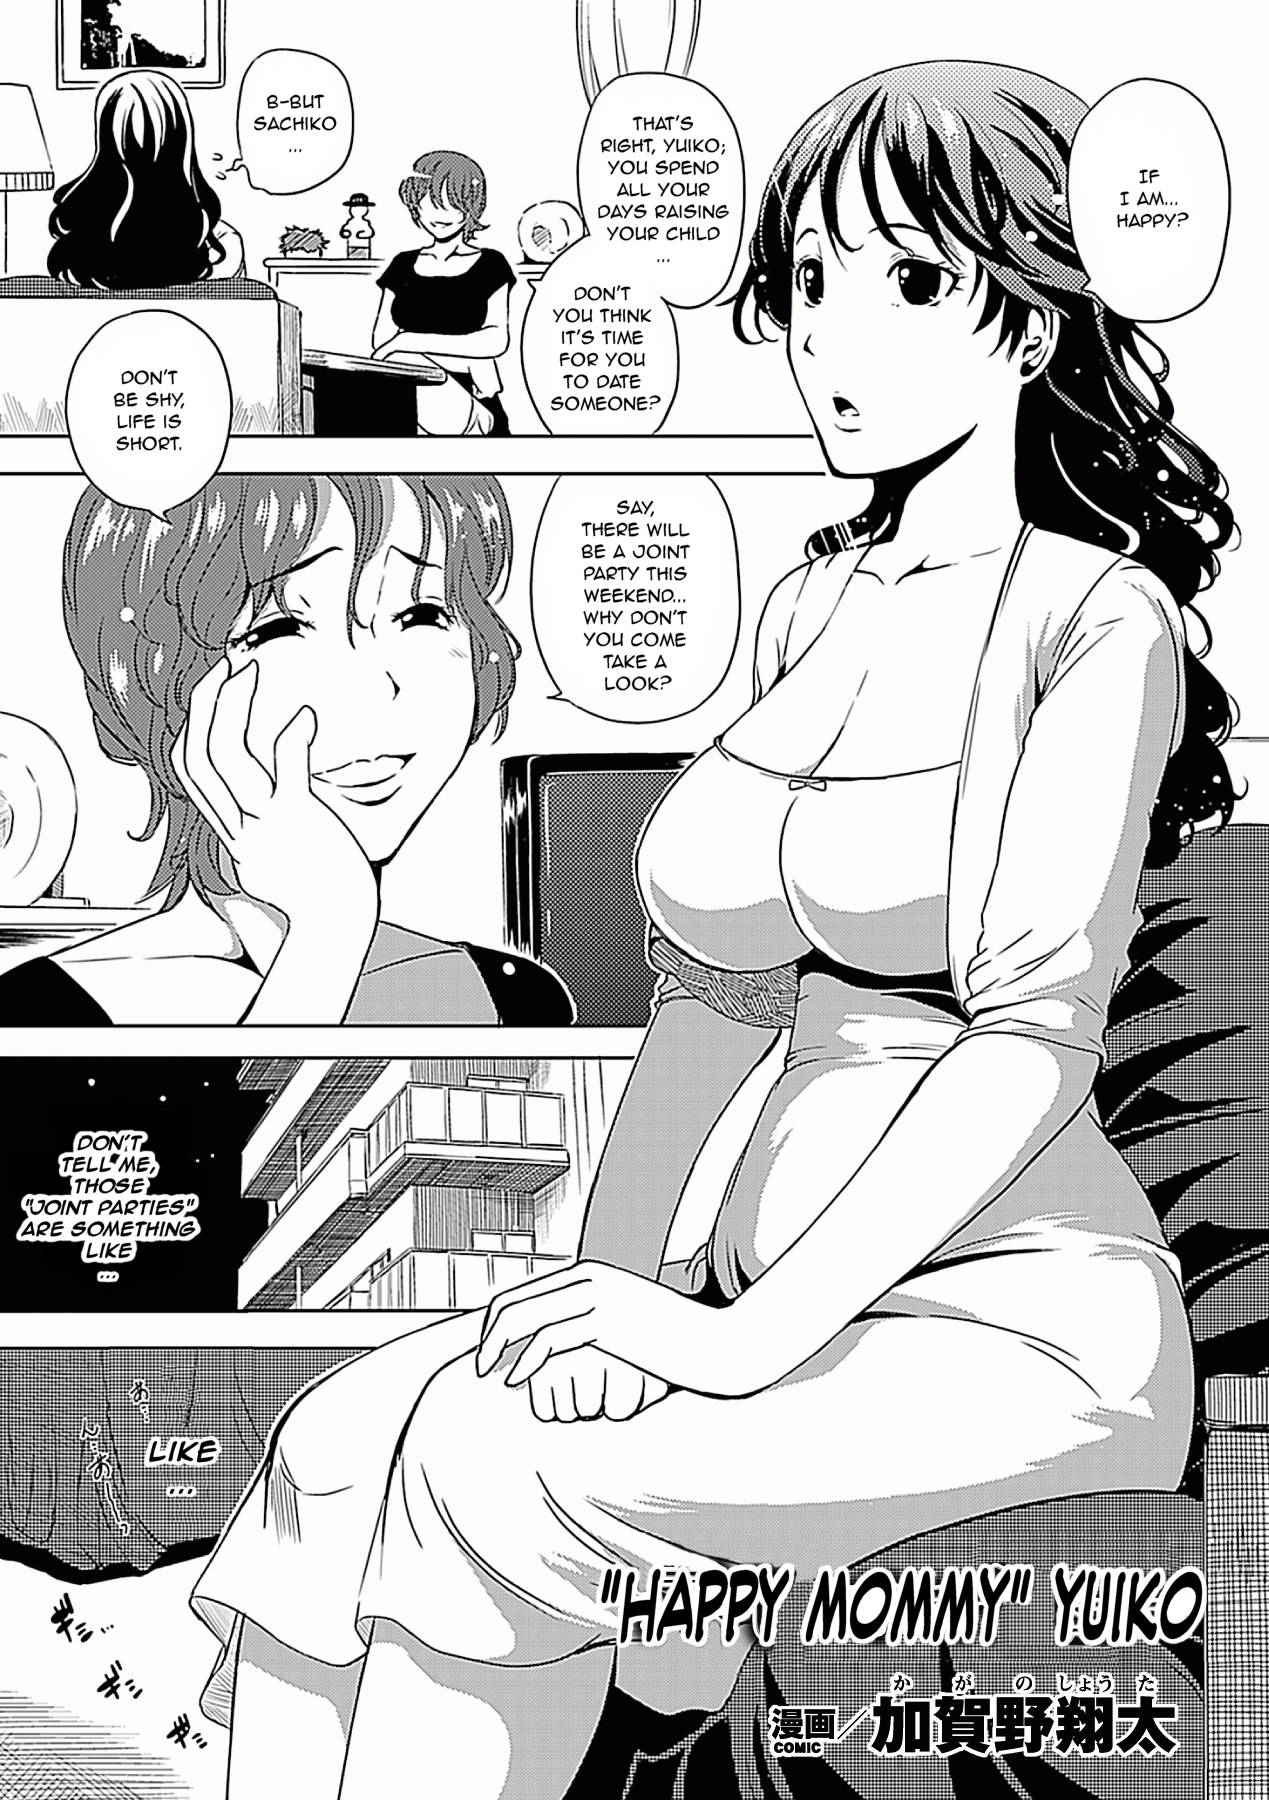 Read hentai comics online